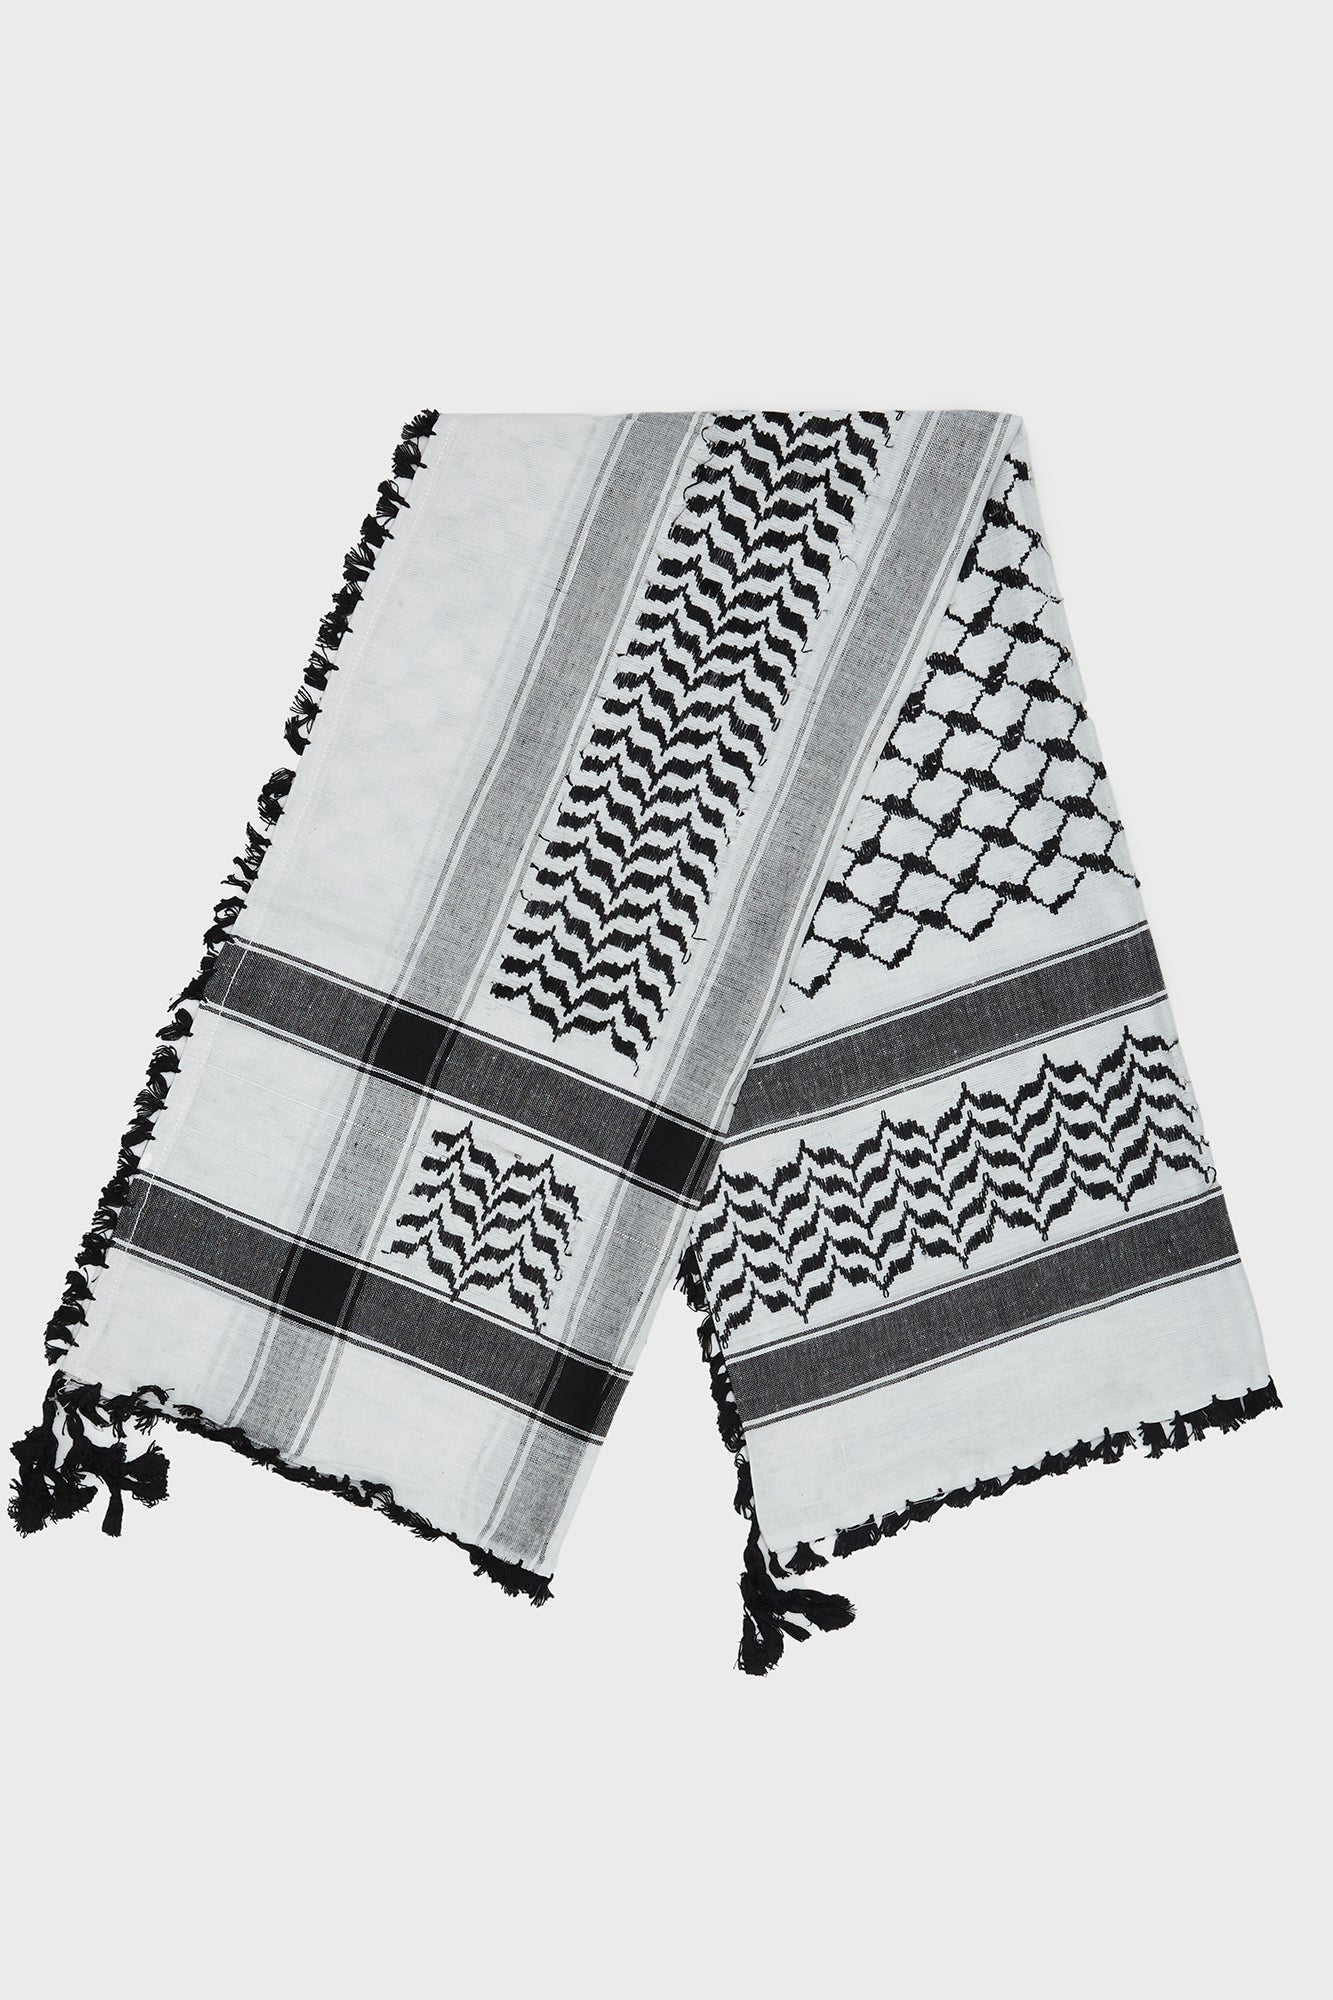 Luxury Bamboo Keffiyeh Scarf - Palestinian Pattern, Fringe Finishing - Man Occasional/Casual Wear - 120 cm x 120 cm - Black/White - Cave